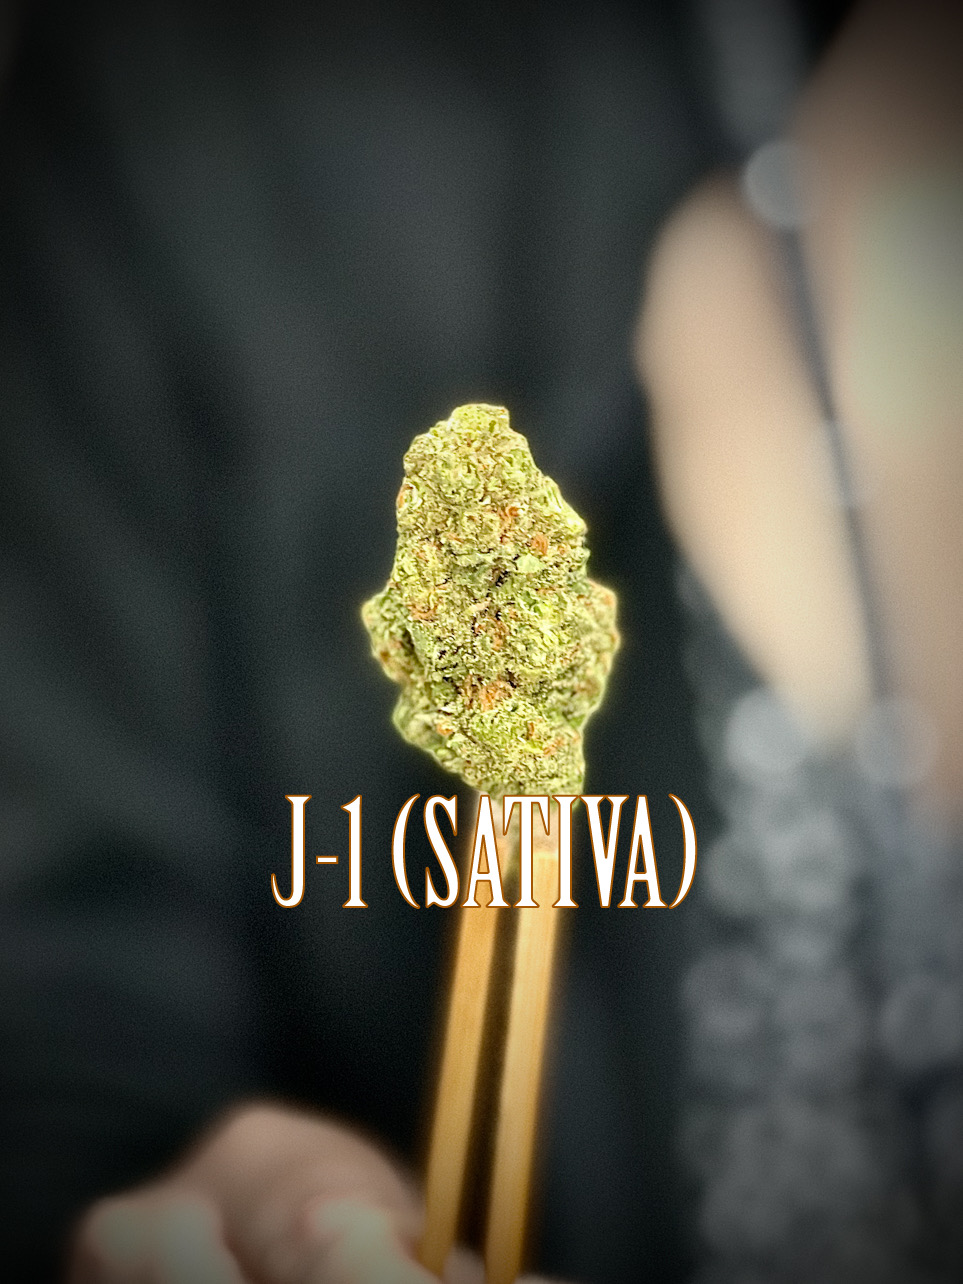 J-1 Sativa strain high energy